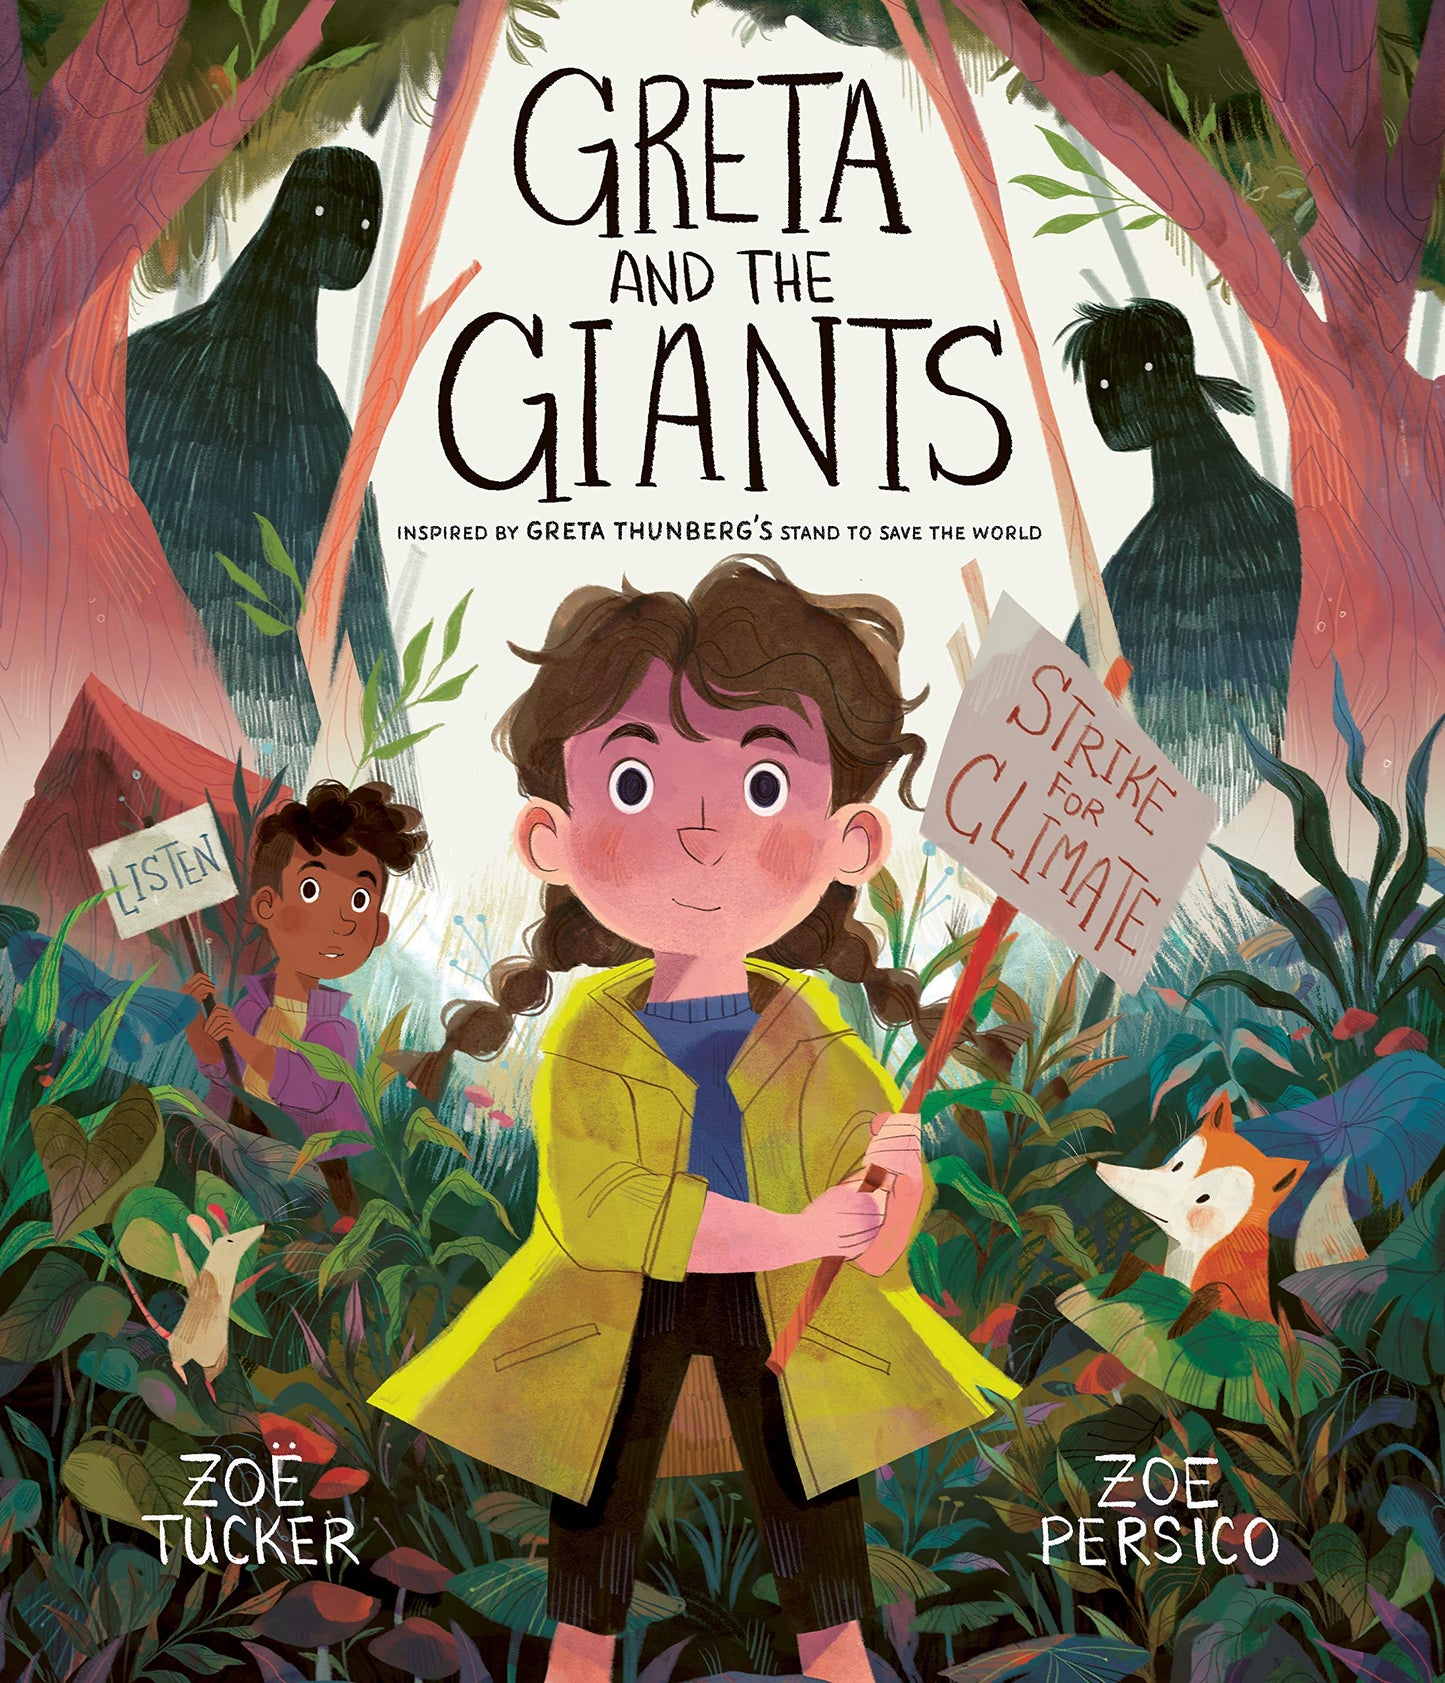 Greta And The Giants by Zoe Tucker and Zoe Persico